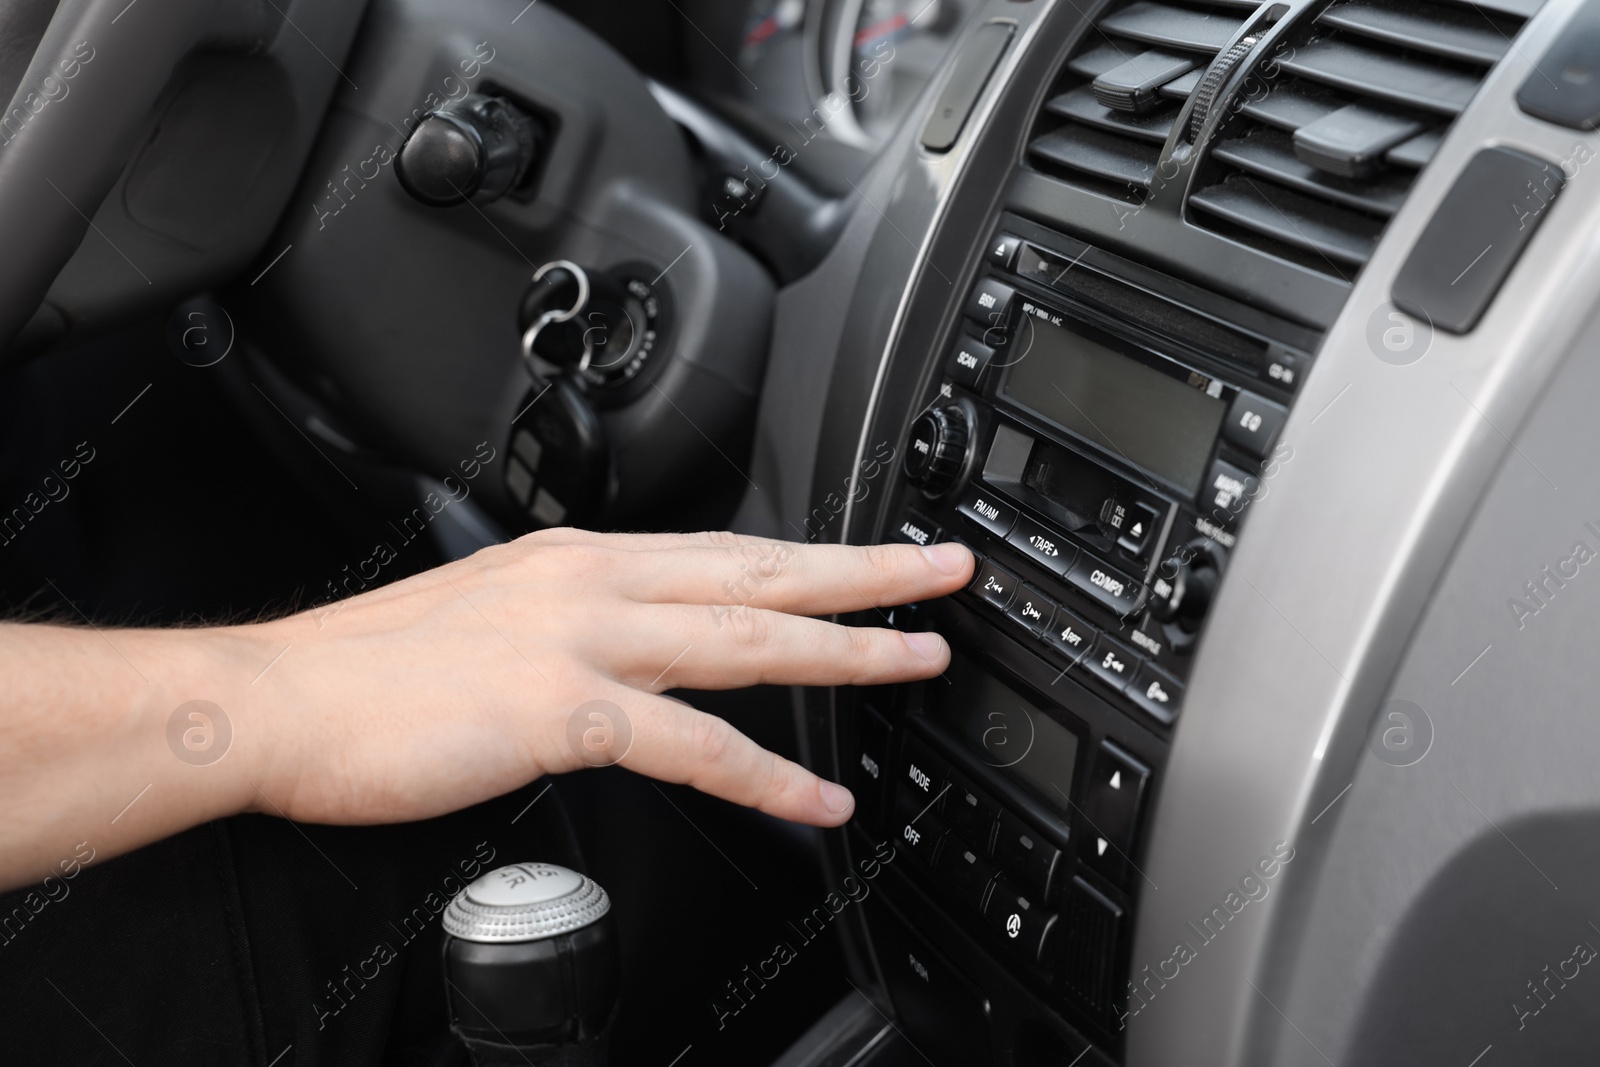 Photo of Choosing favorite radio. Woman pressing button on vehicle audio in car, closeup